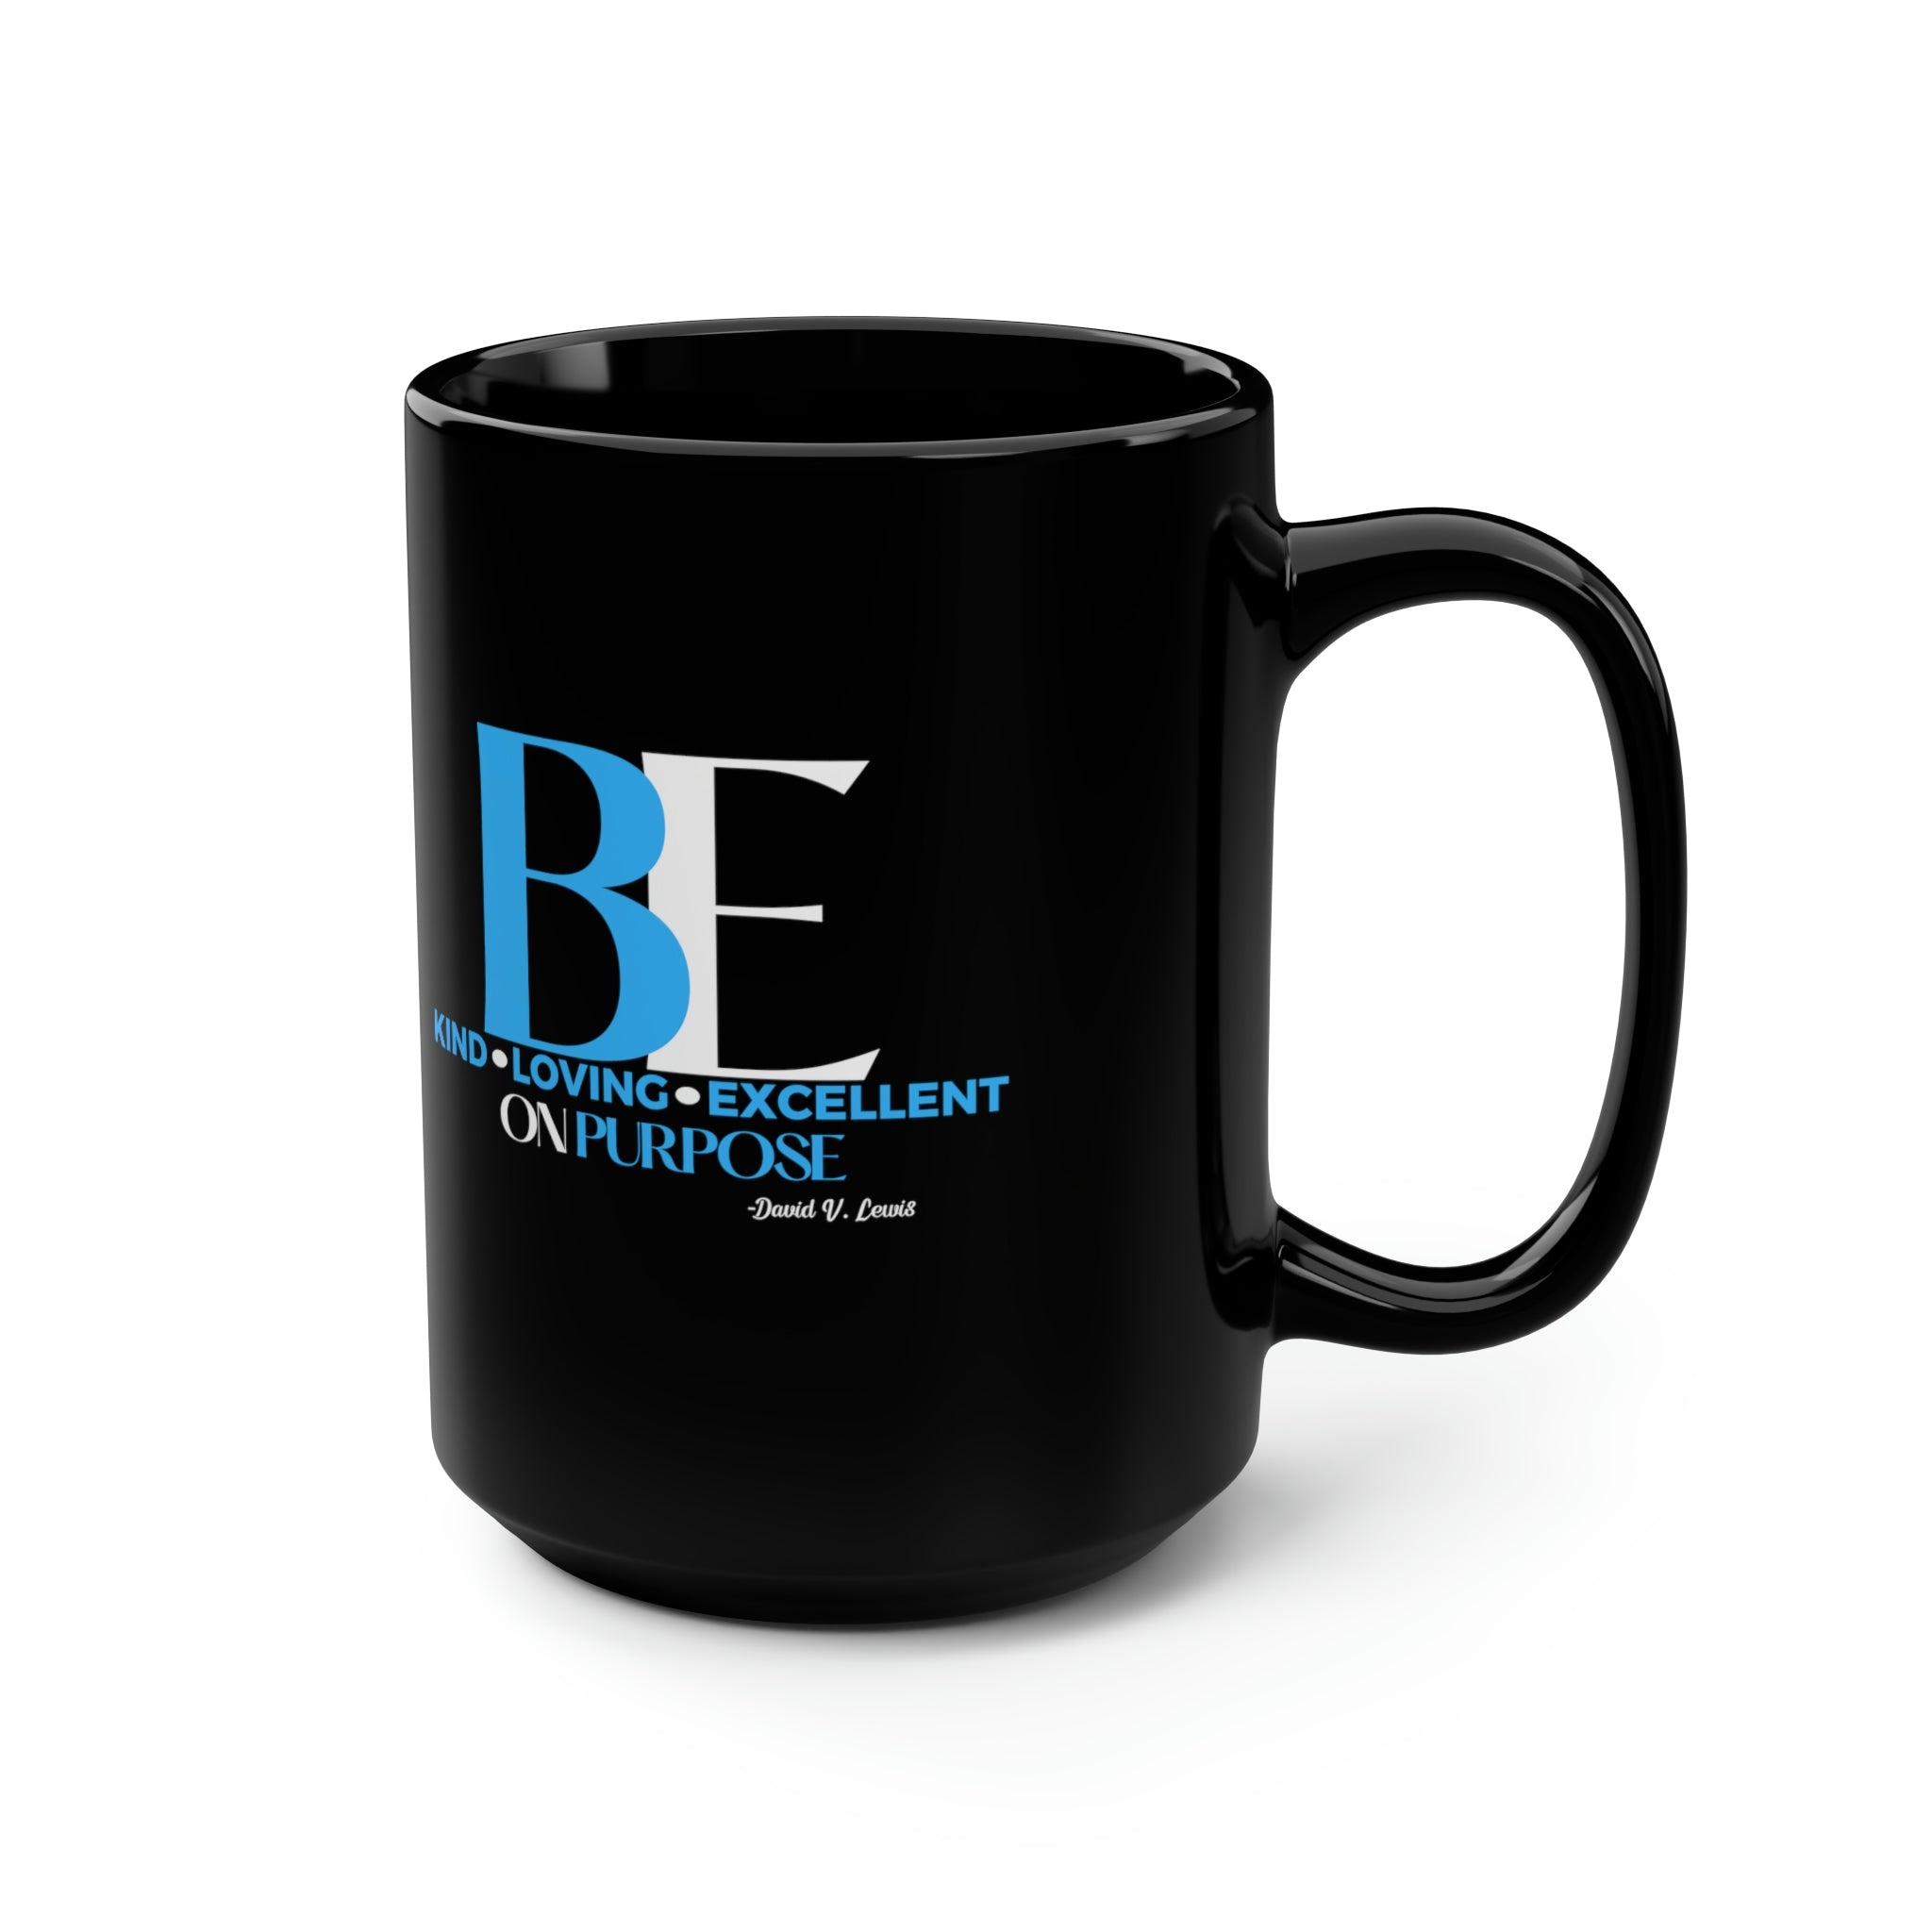 Big "Be" Style Coffee Mug